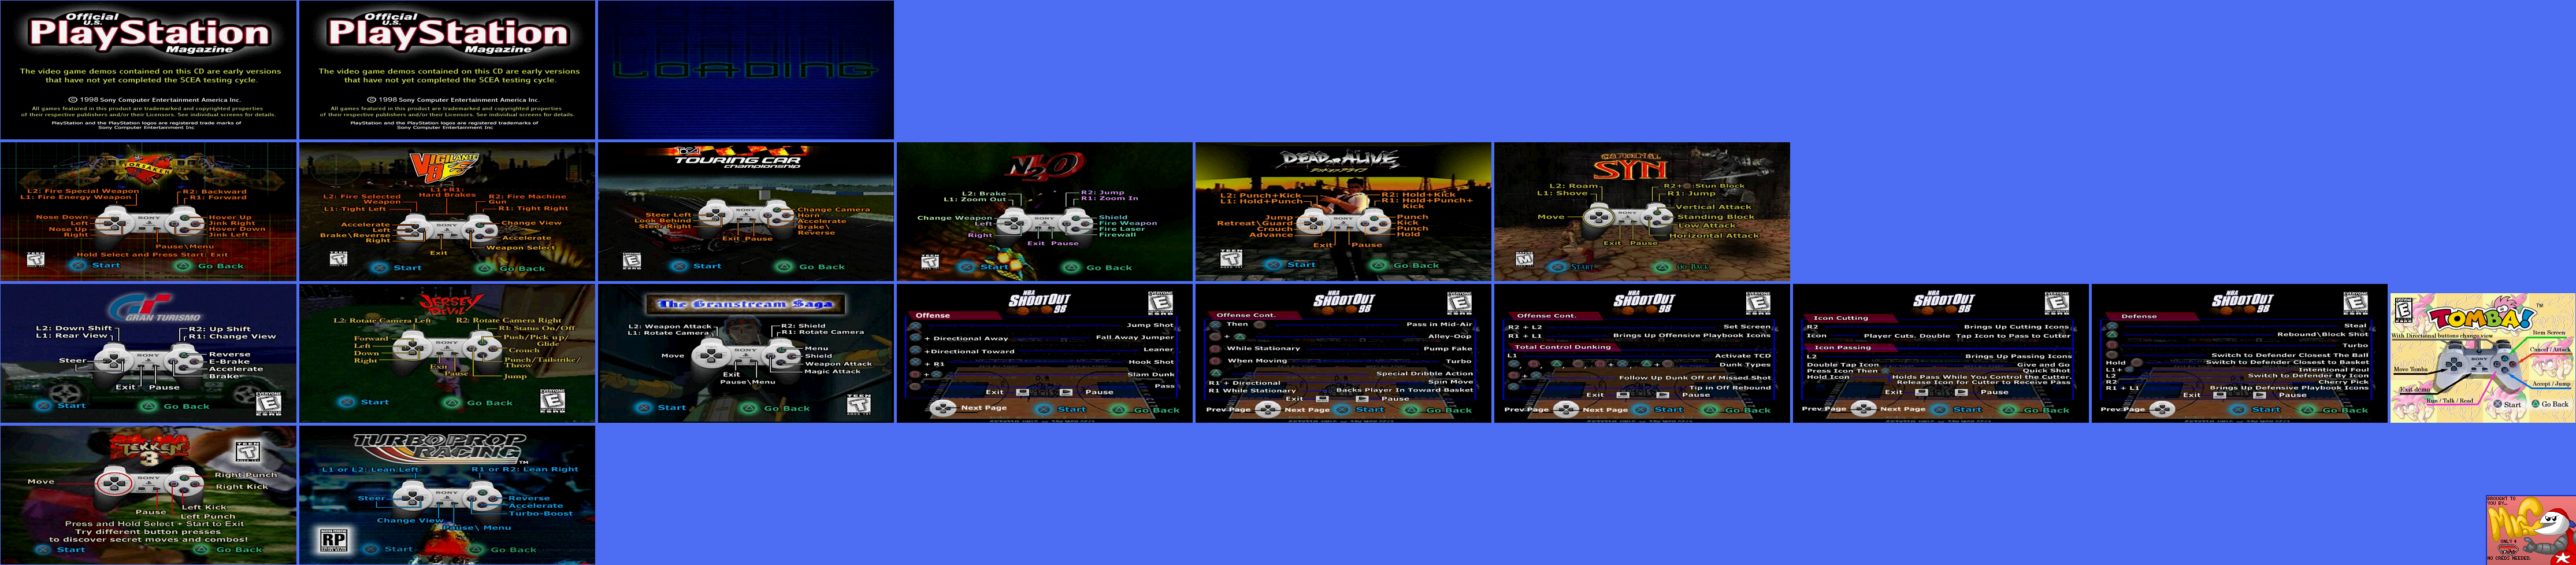 Official U.S. PlayStation Magazine Demo Discs (USA) - Controls Screens (09-11)